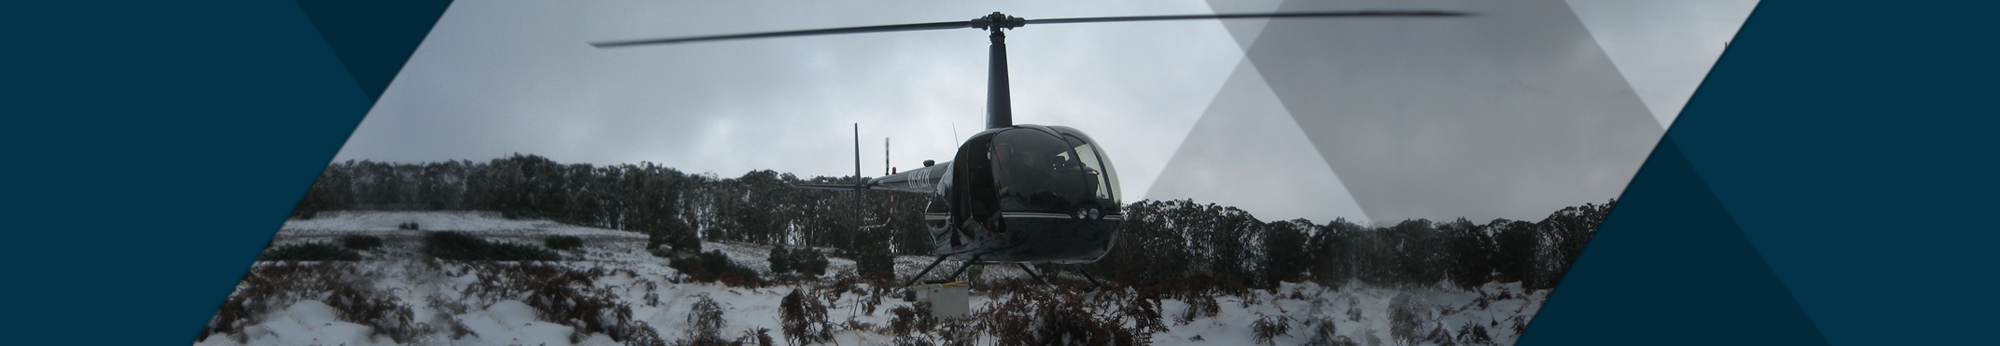 banner_Snow-chopper-6.copy_